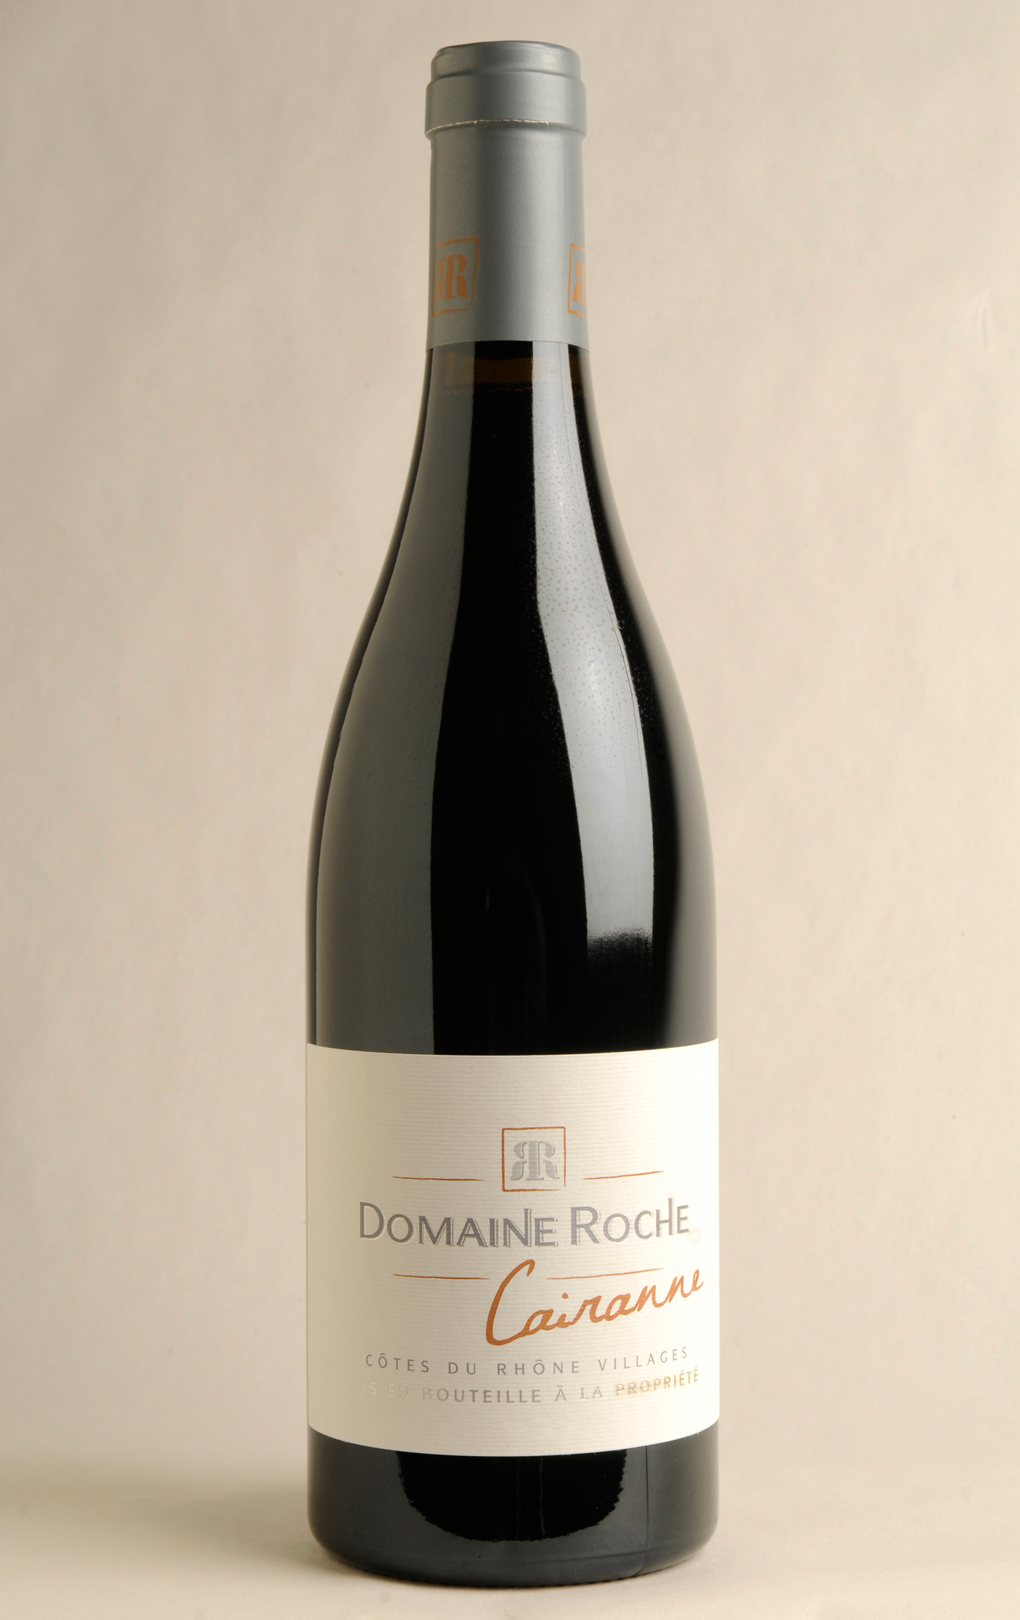 2013 Domaine Roche Cairanne Rouge - click image for full description